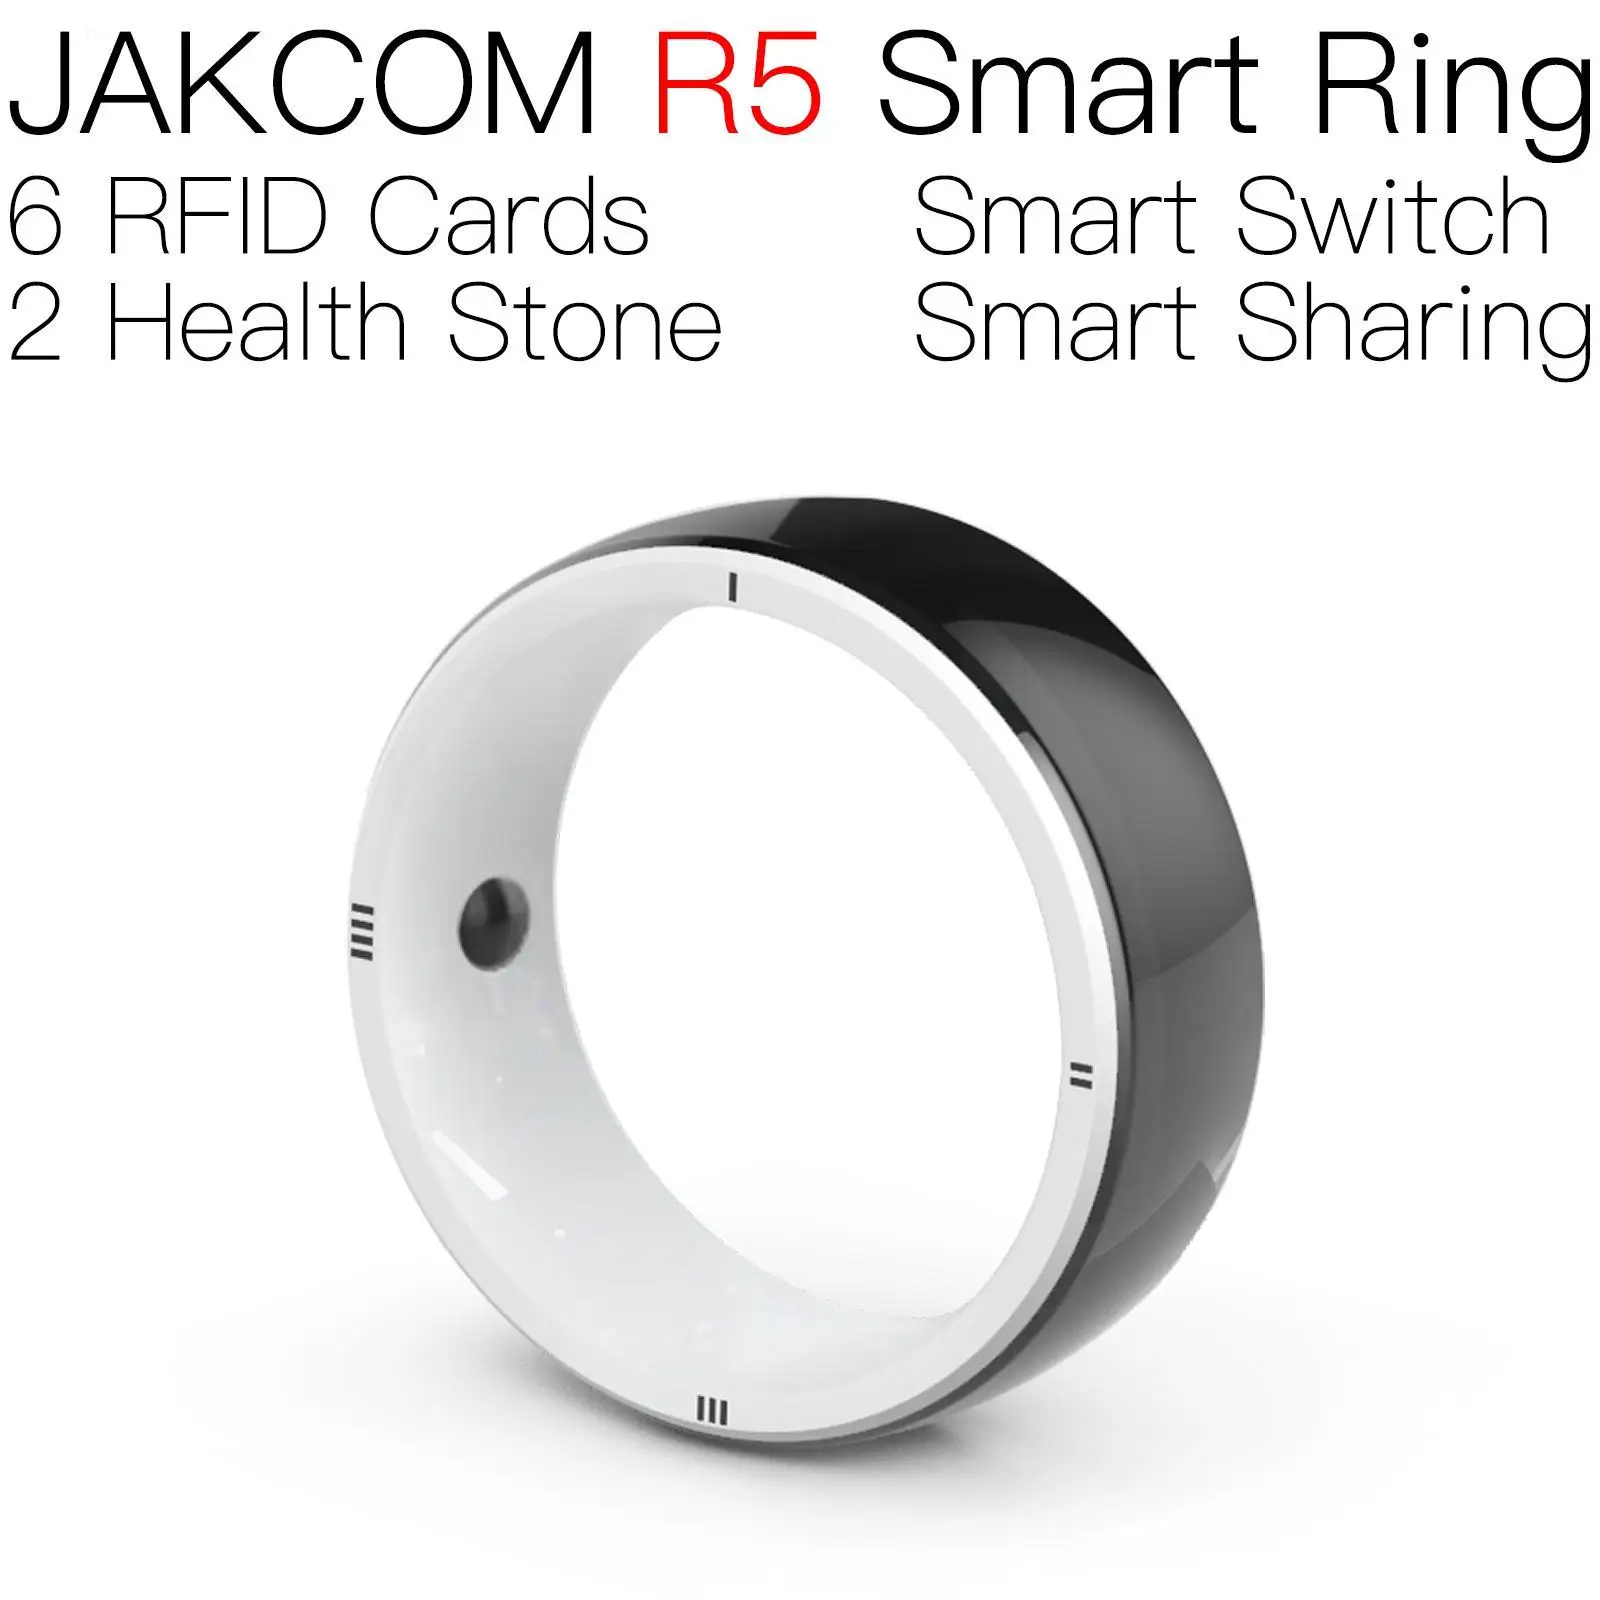 

JAKCOM R5 Smart Ring Super value than rfid 125 khz rewritable sticker ter lazer tag chip wifi sign hotels qr microchip